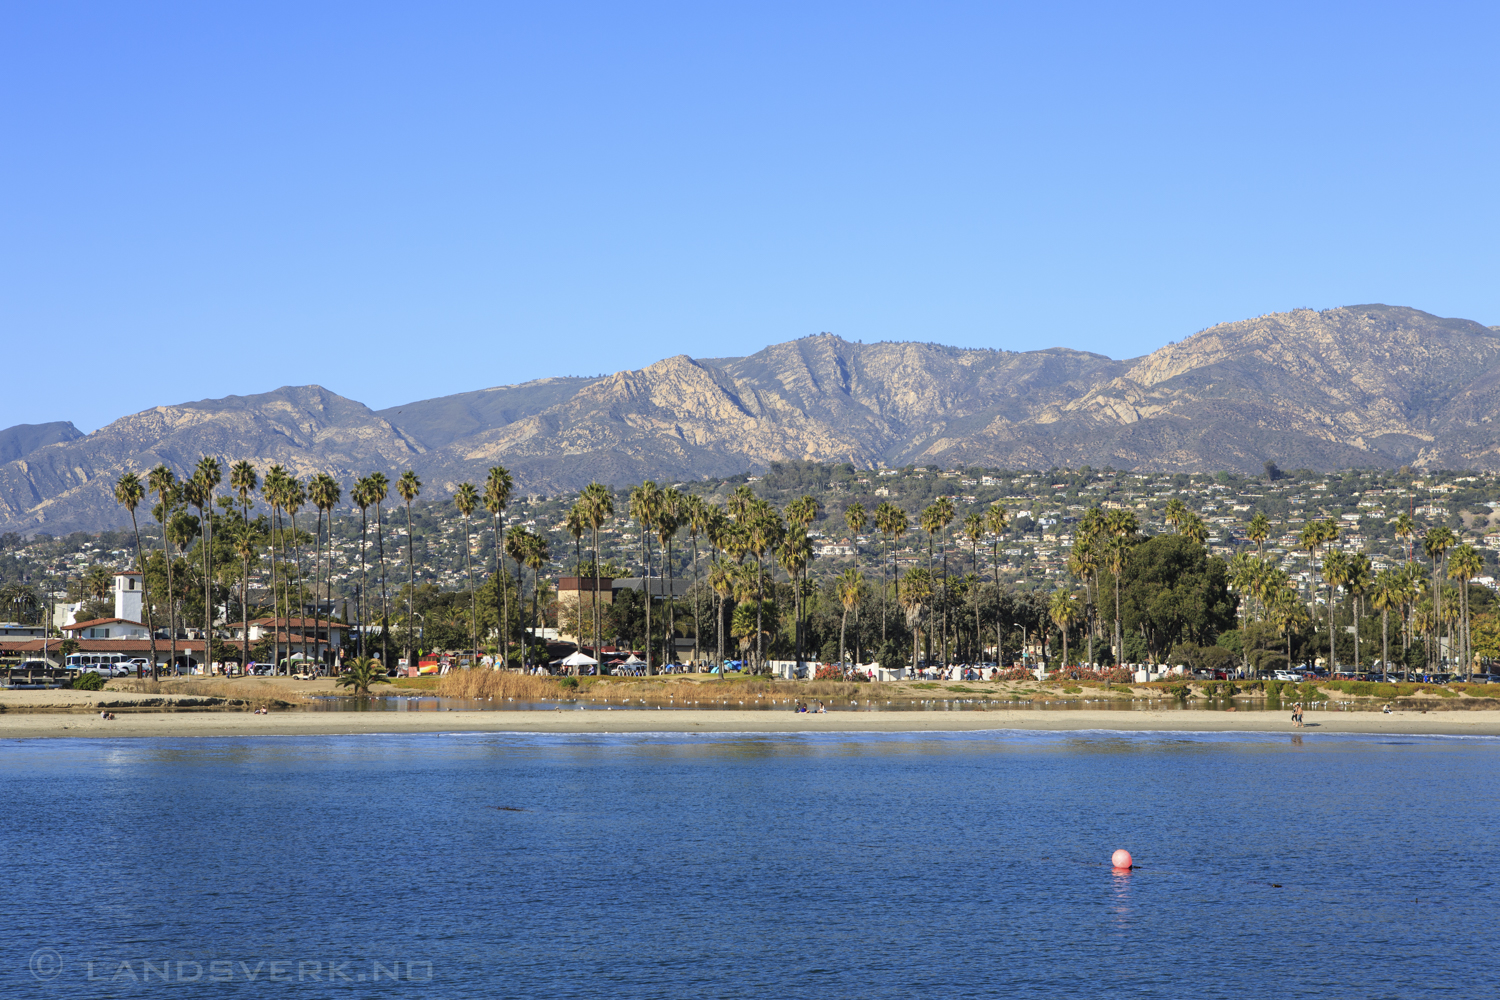 Santa Barbara, California.

(Canon EOS 5D Mark III / Canon EF 24-70mm f/2.8 L USM)